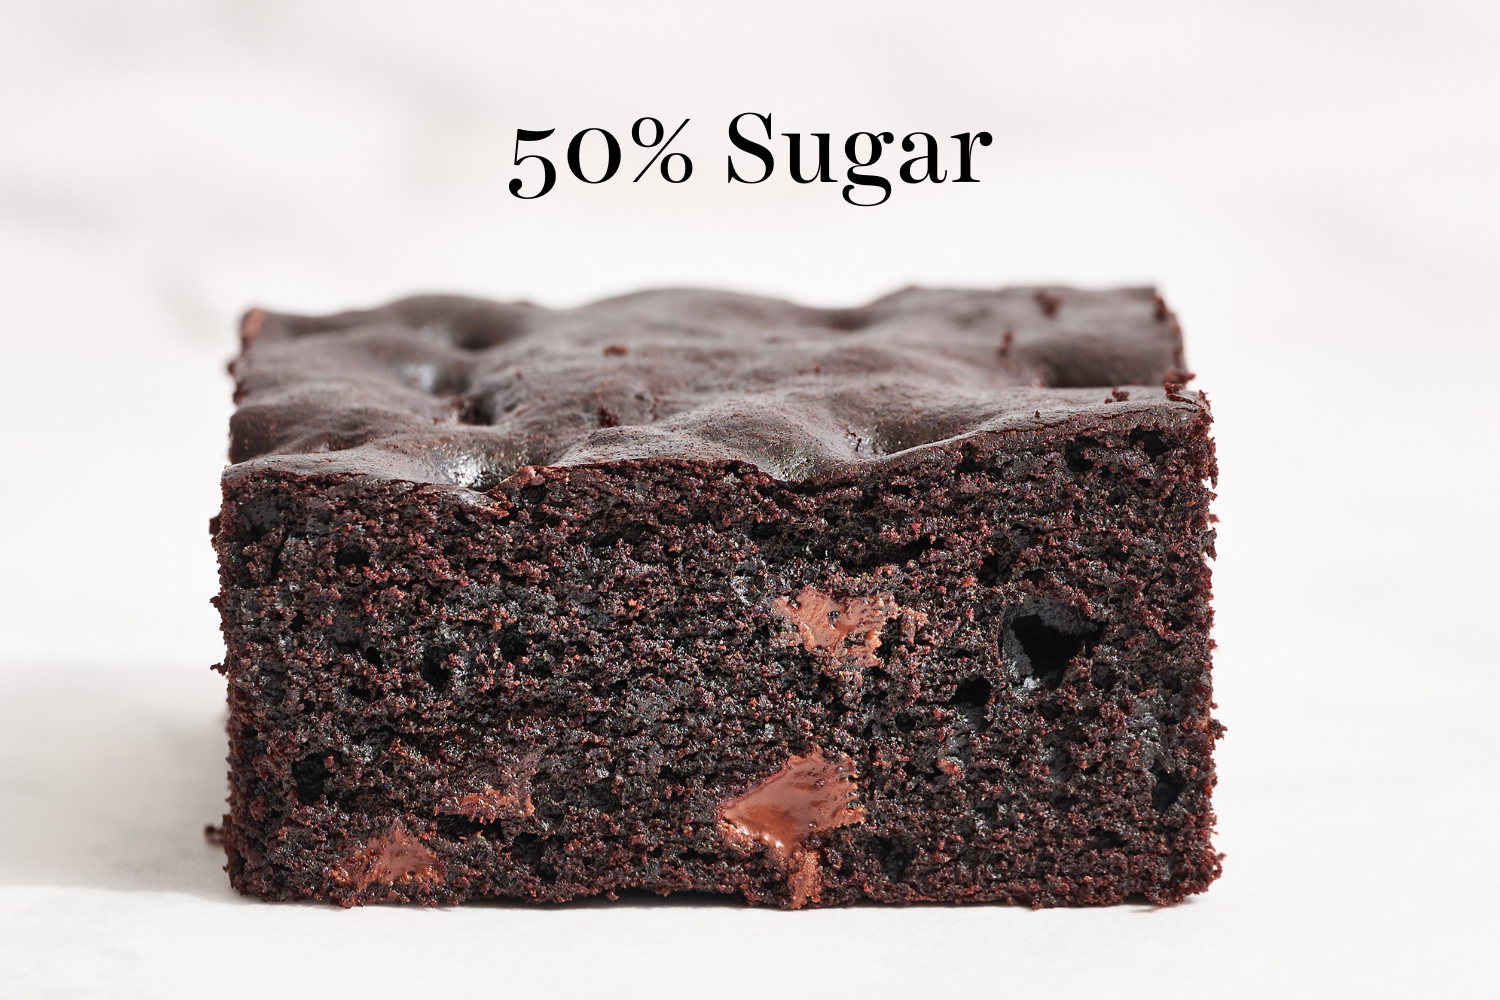 a slice of the 50% sugar brownies.